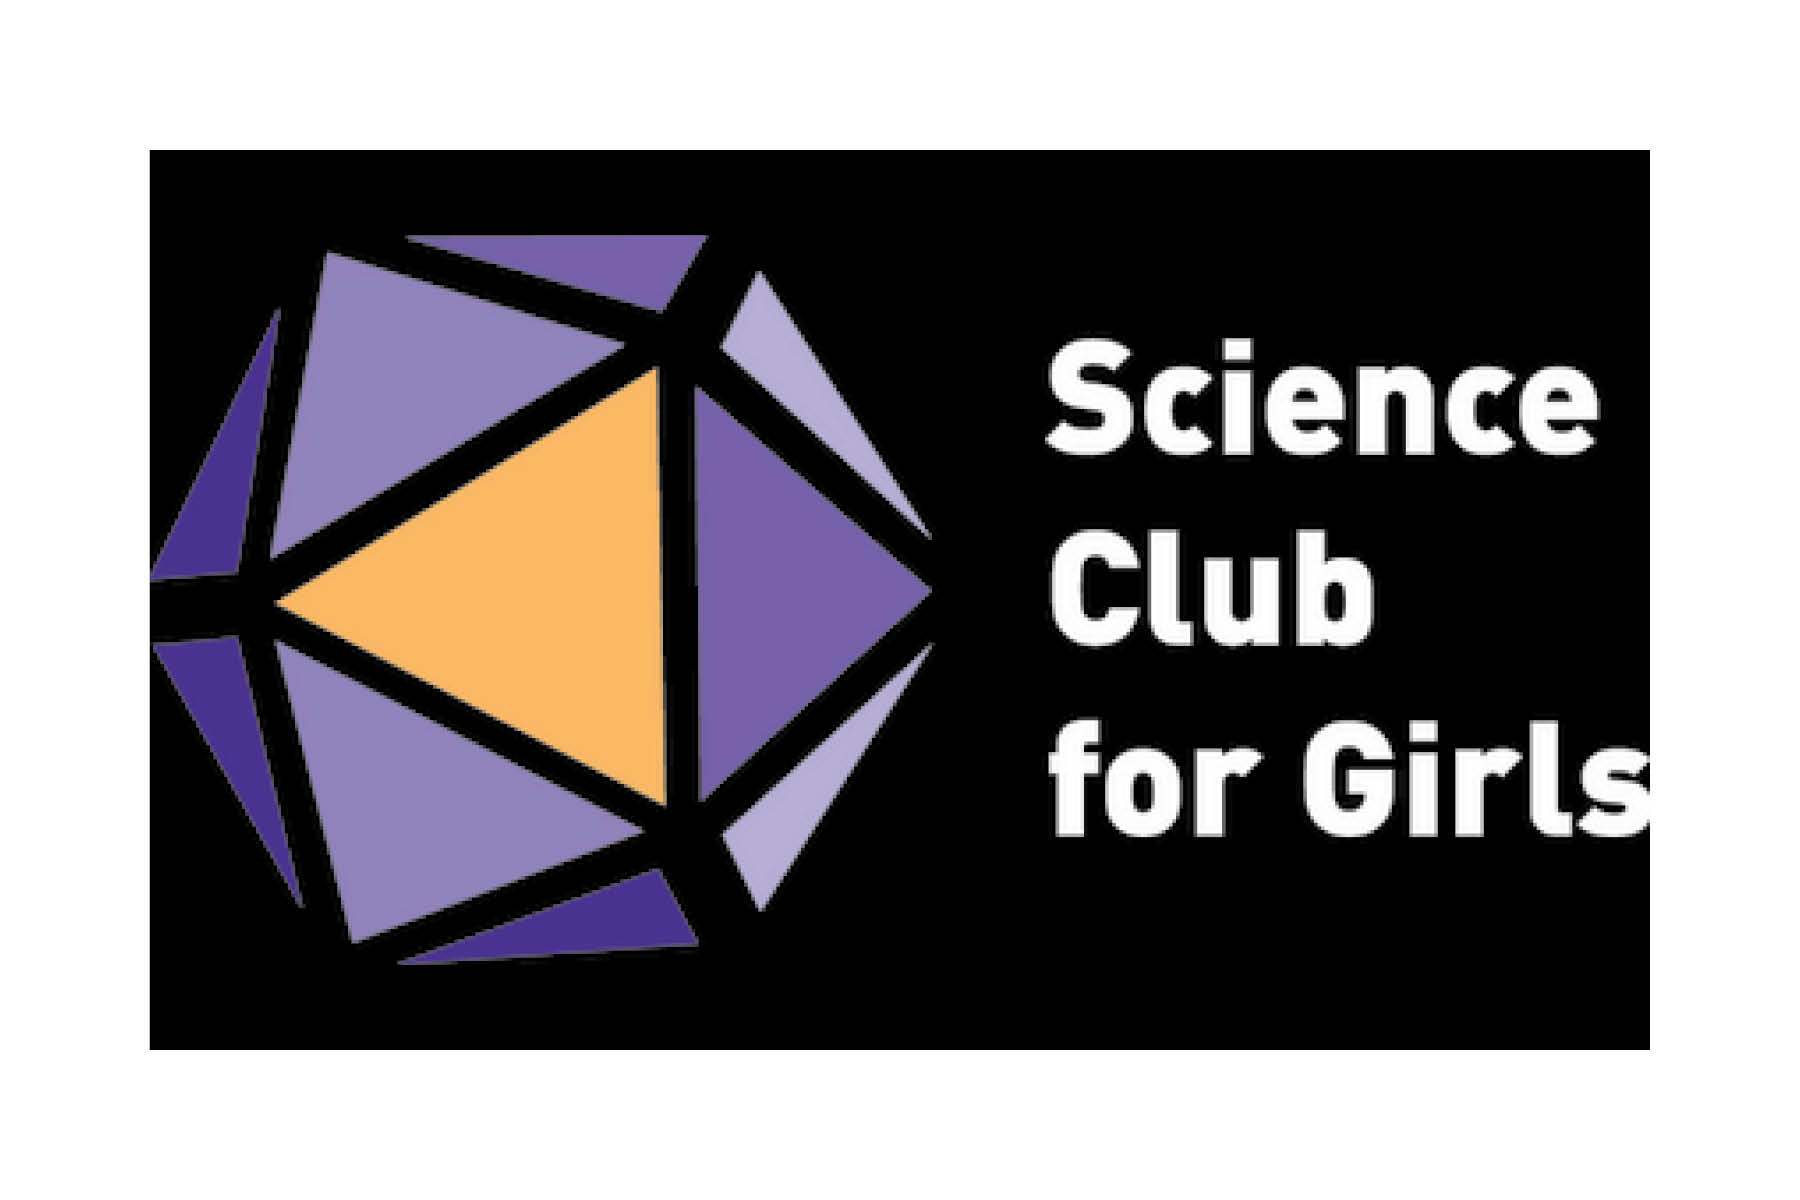 Science Club for Girls logo